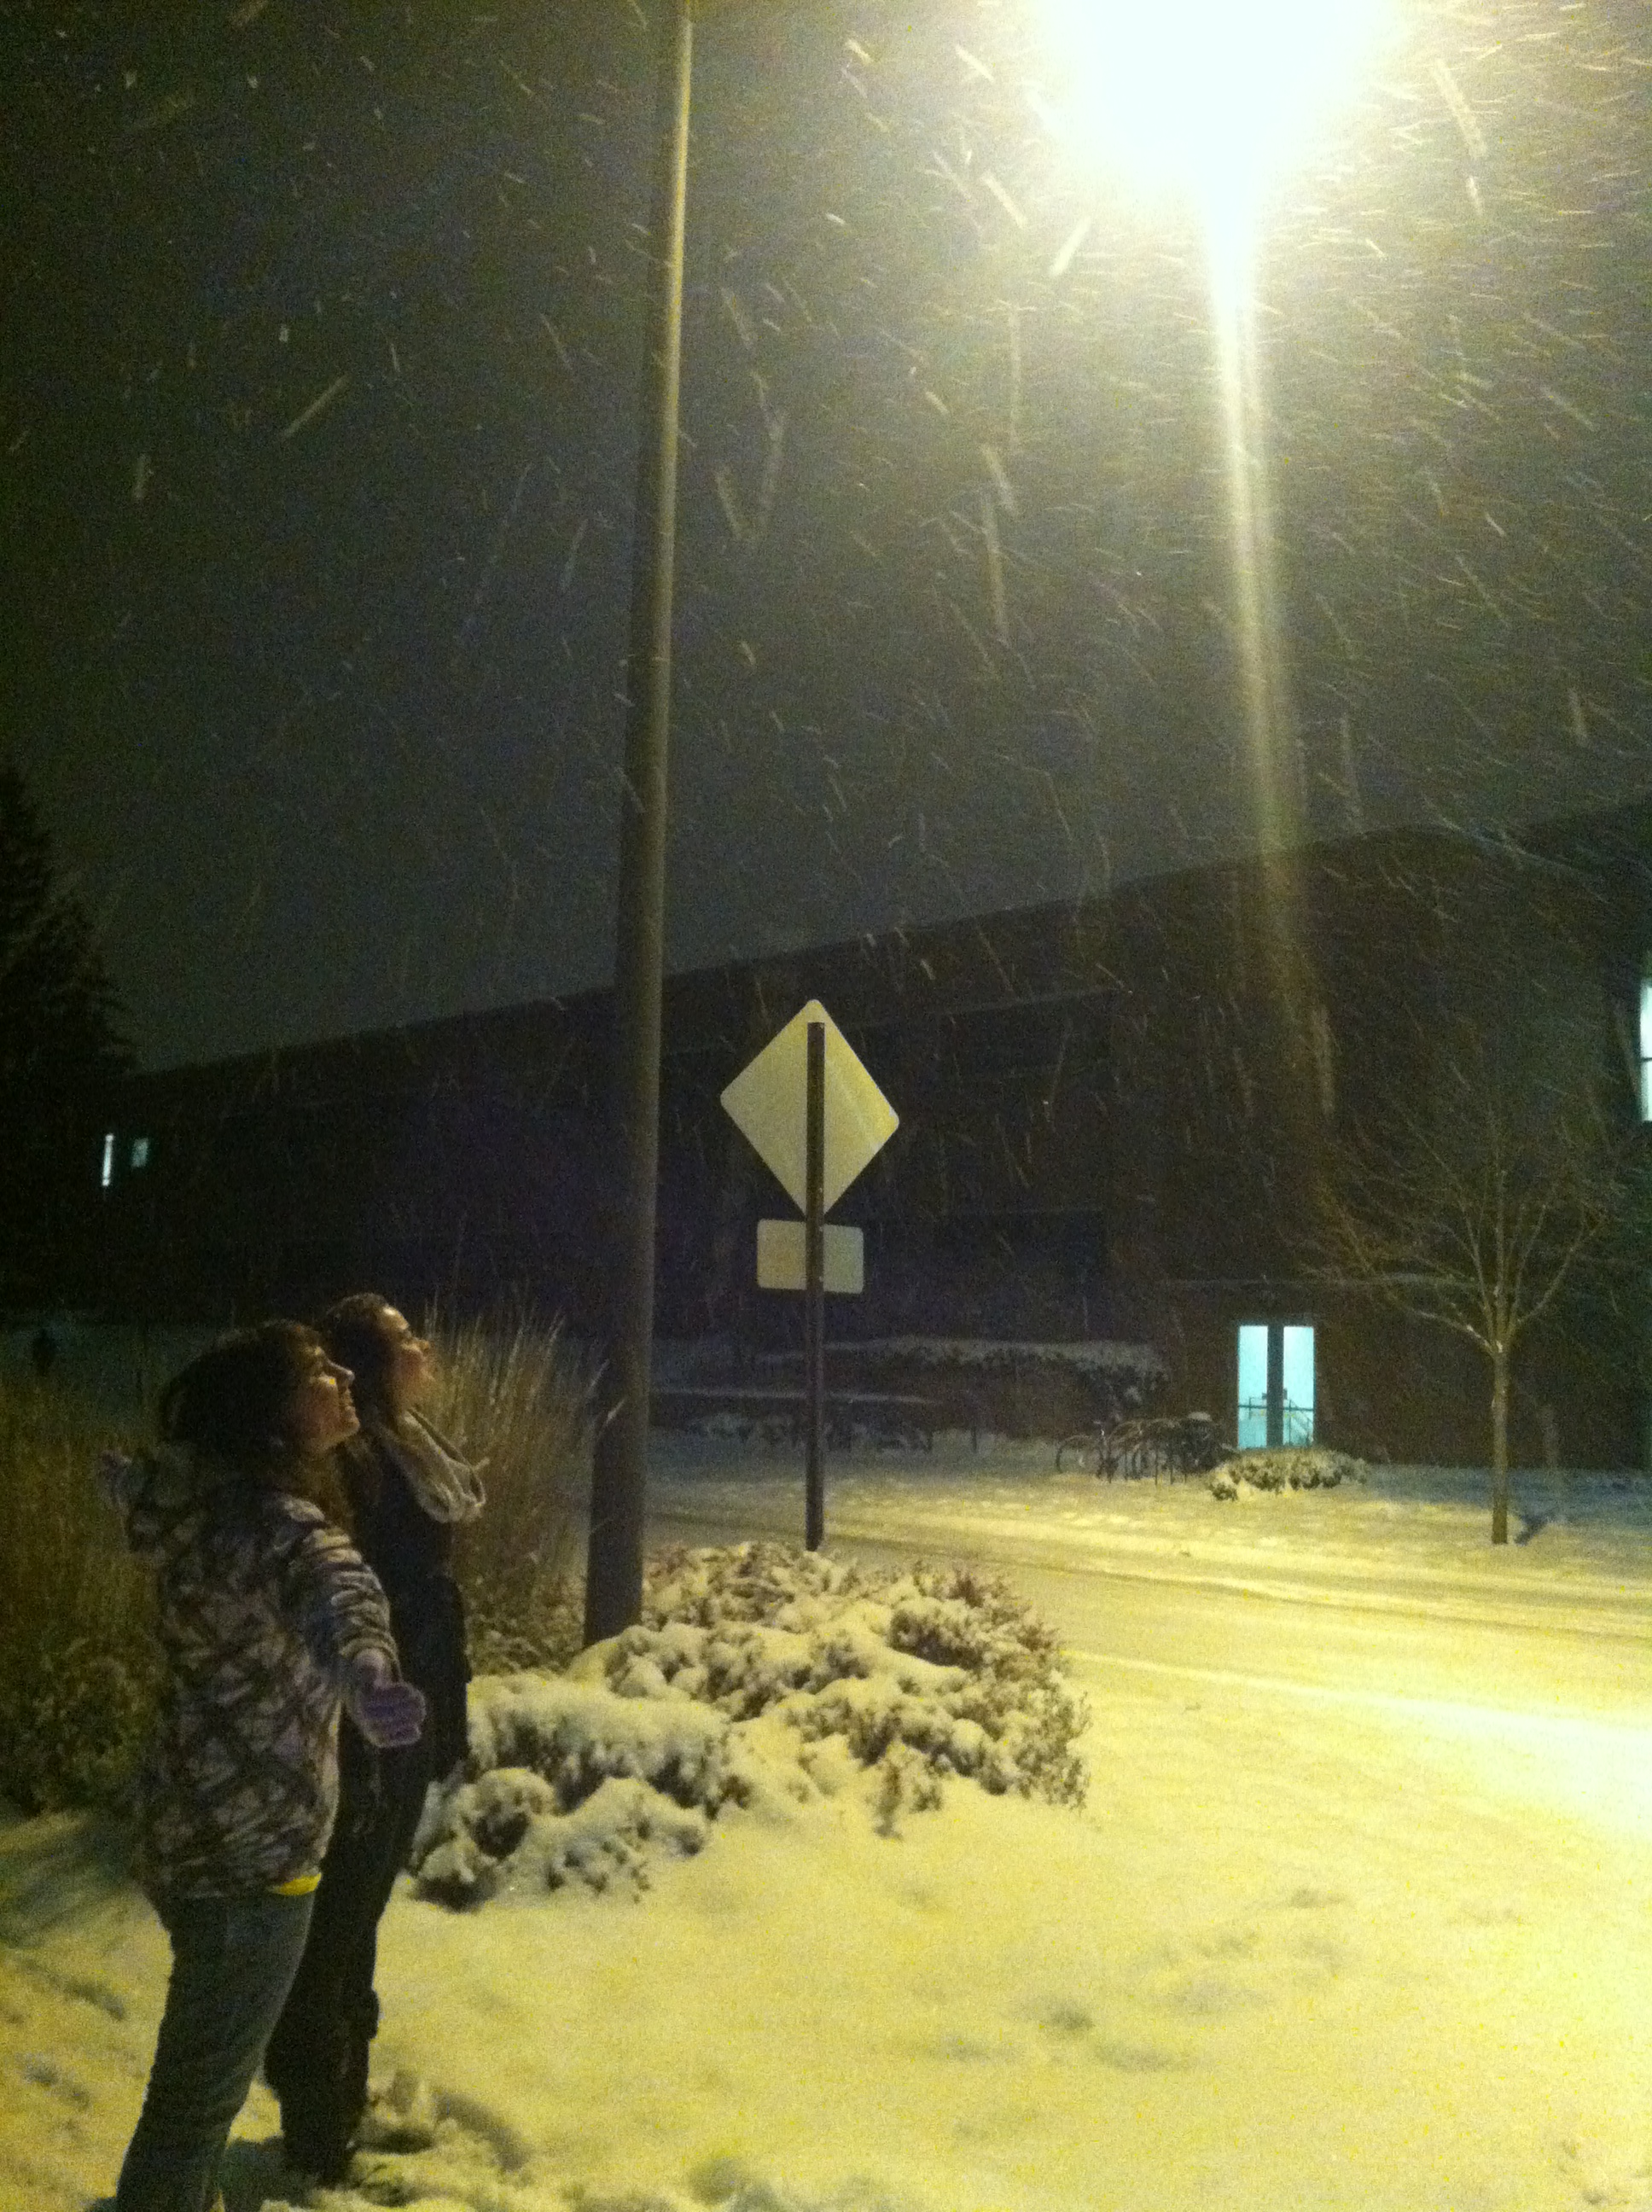 Ashley and Madi gazing at the falling snow